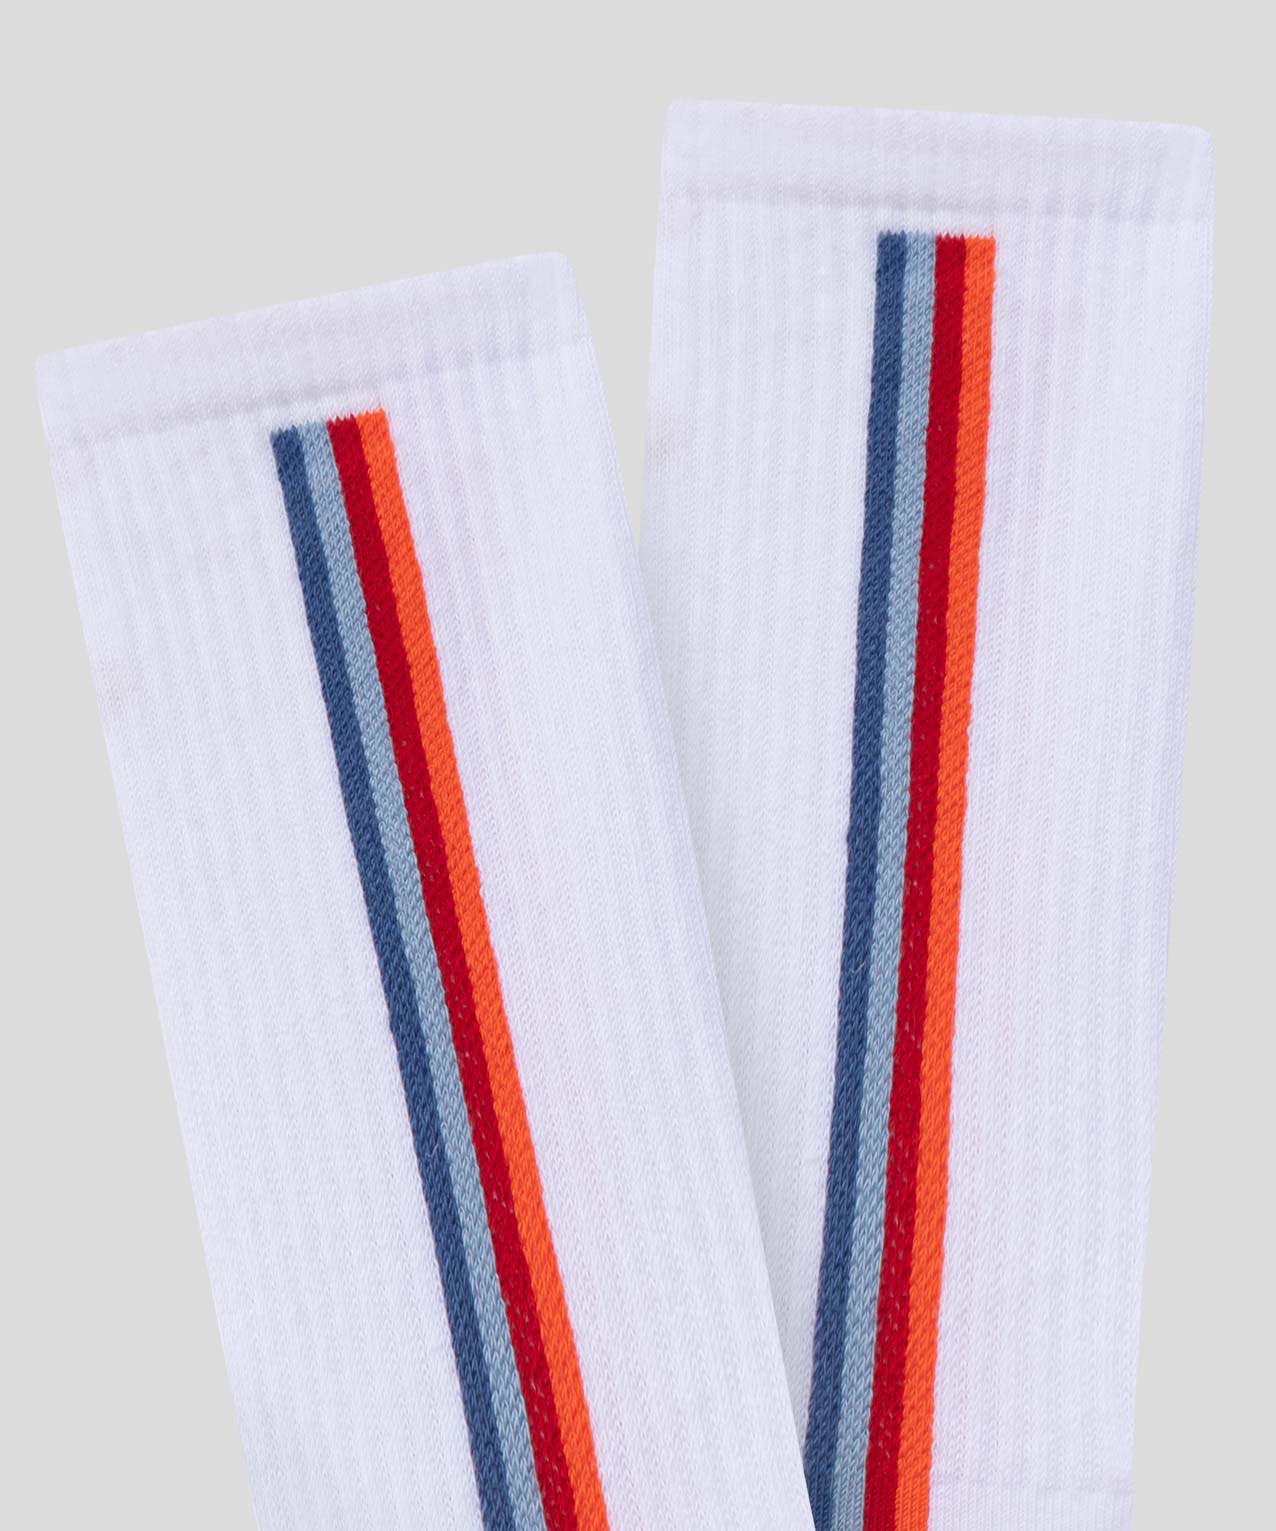 Sports Socks w Side Lines: White